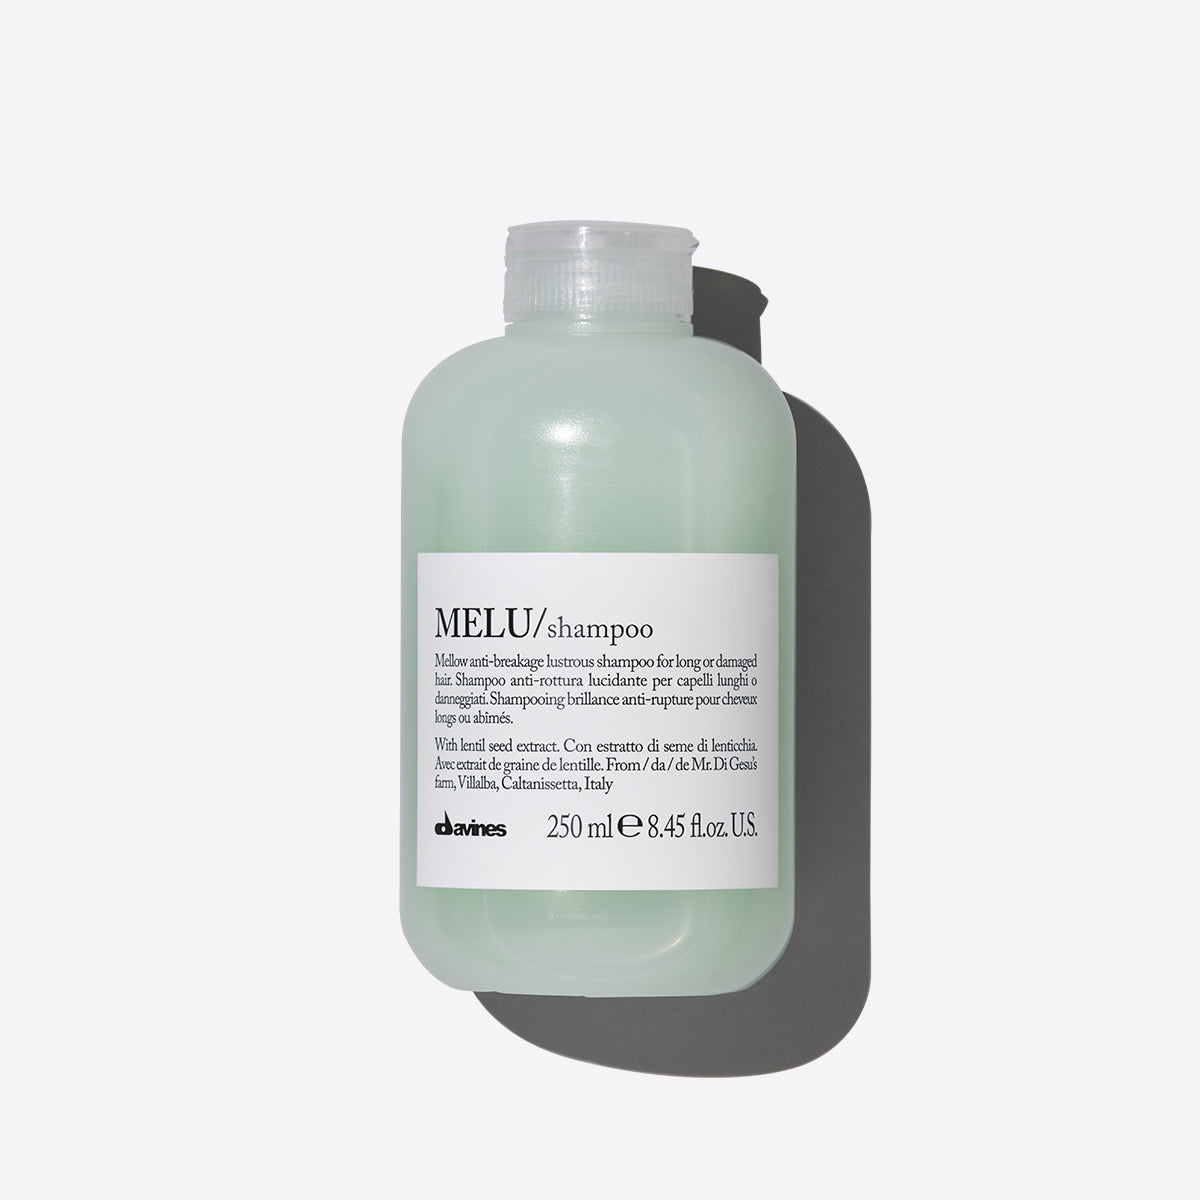 MELU Shampoo 1  250 ml / 8,45 fl.oz.Davines
